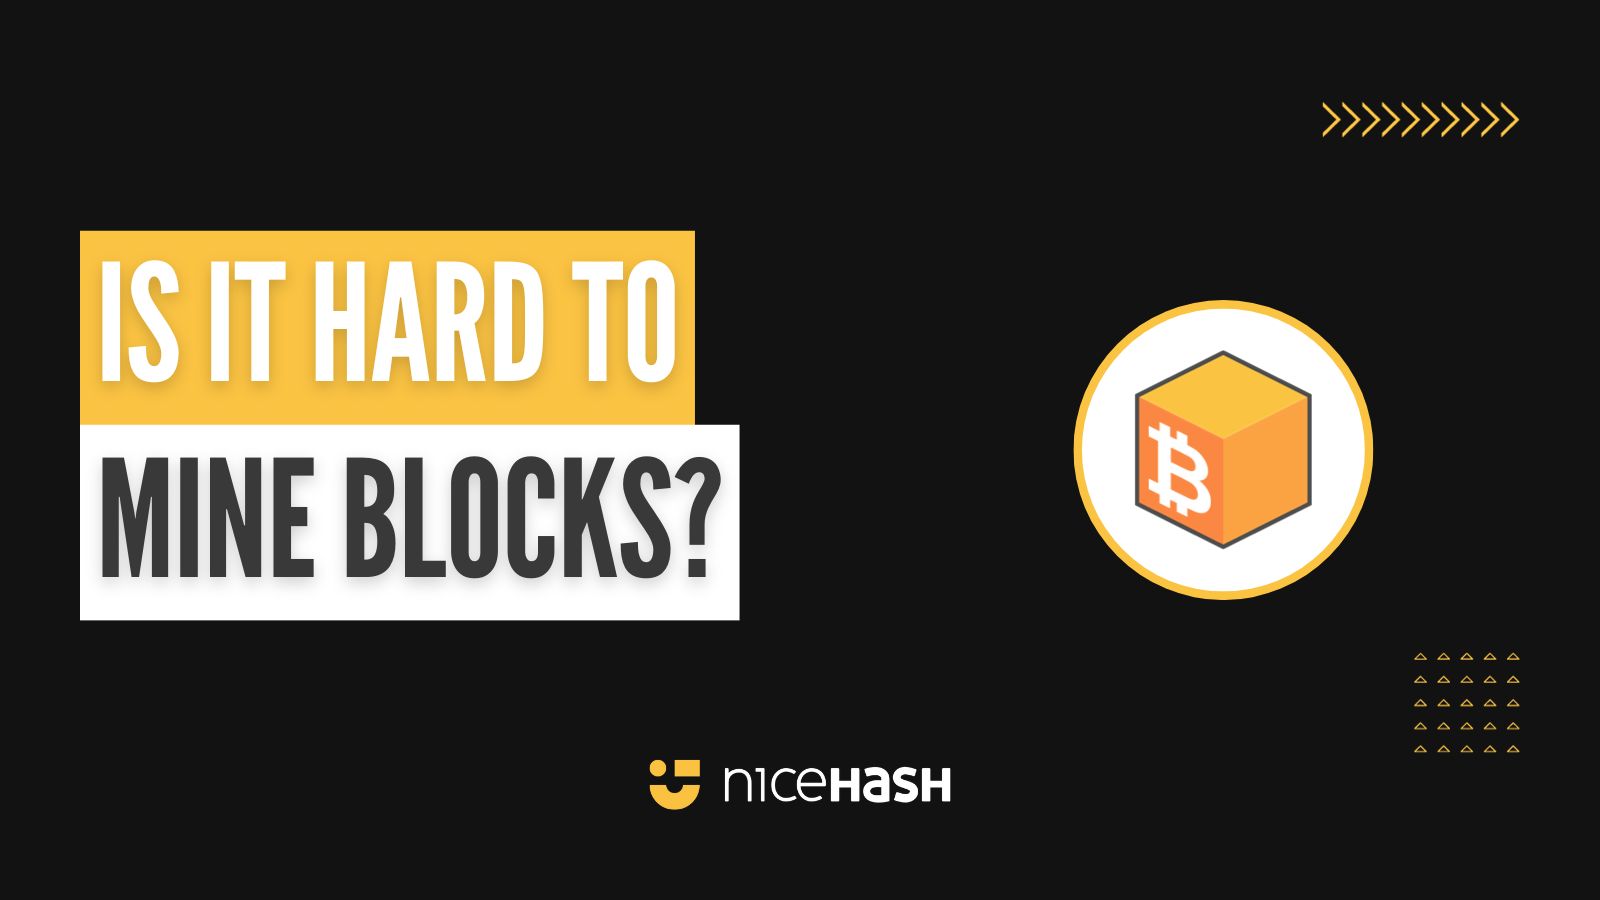 Is it hard to mine blocks?